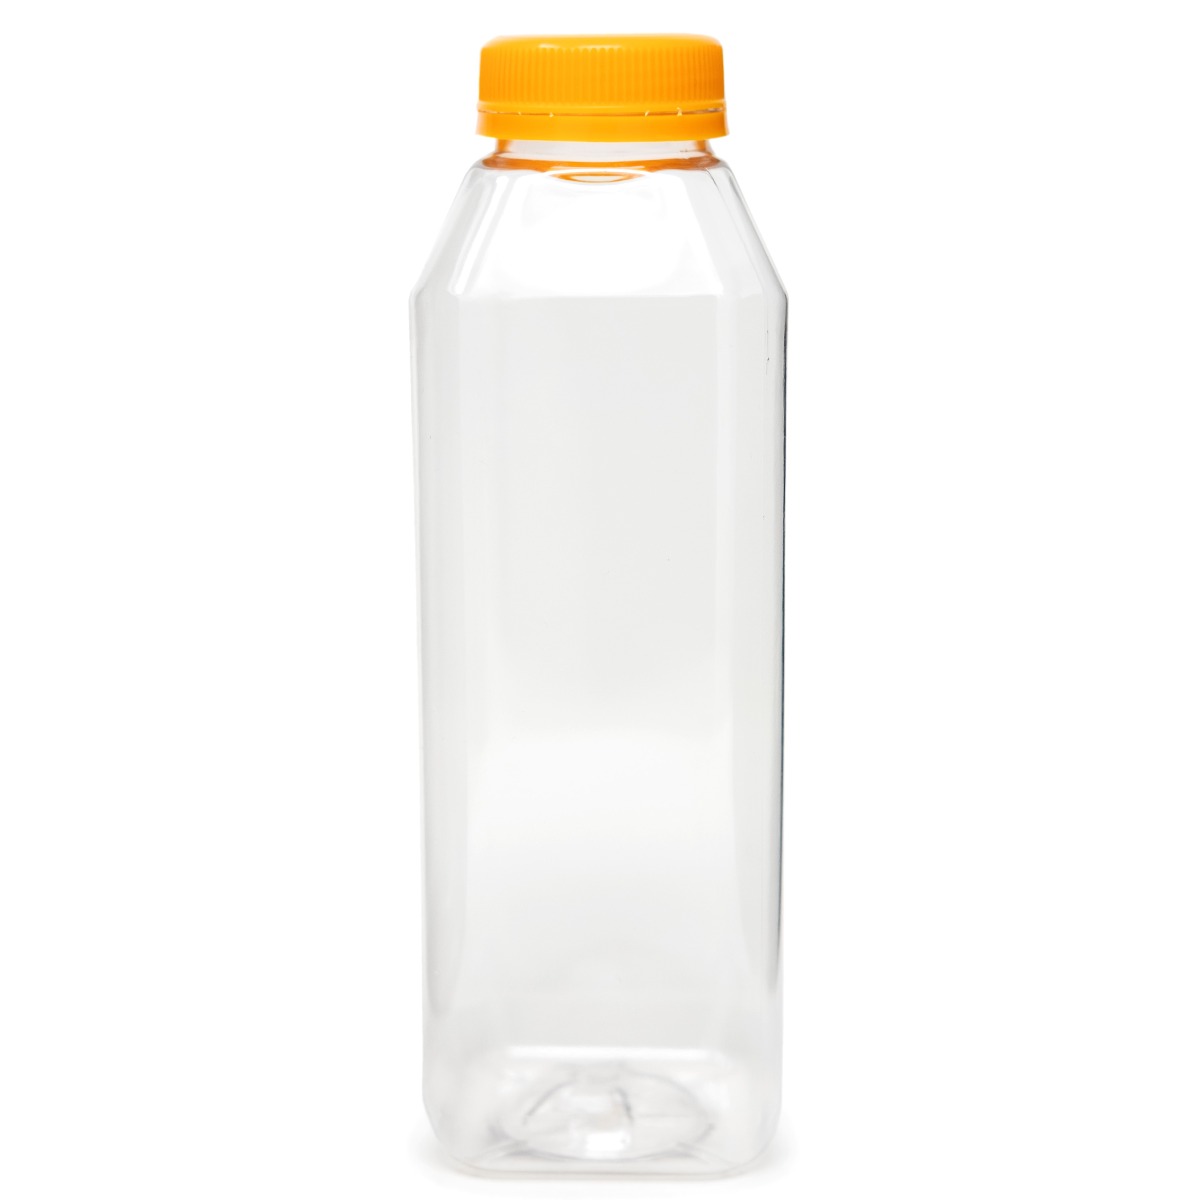 Stock Your Home Plastic Juice Bottles 8 Oz with Lids, Juice Drink Cont